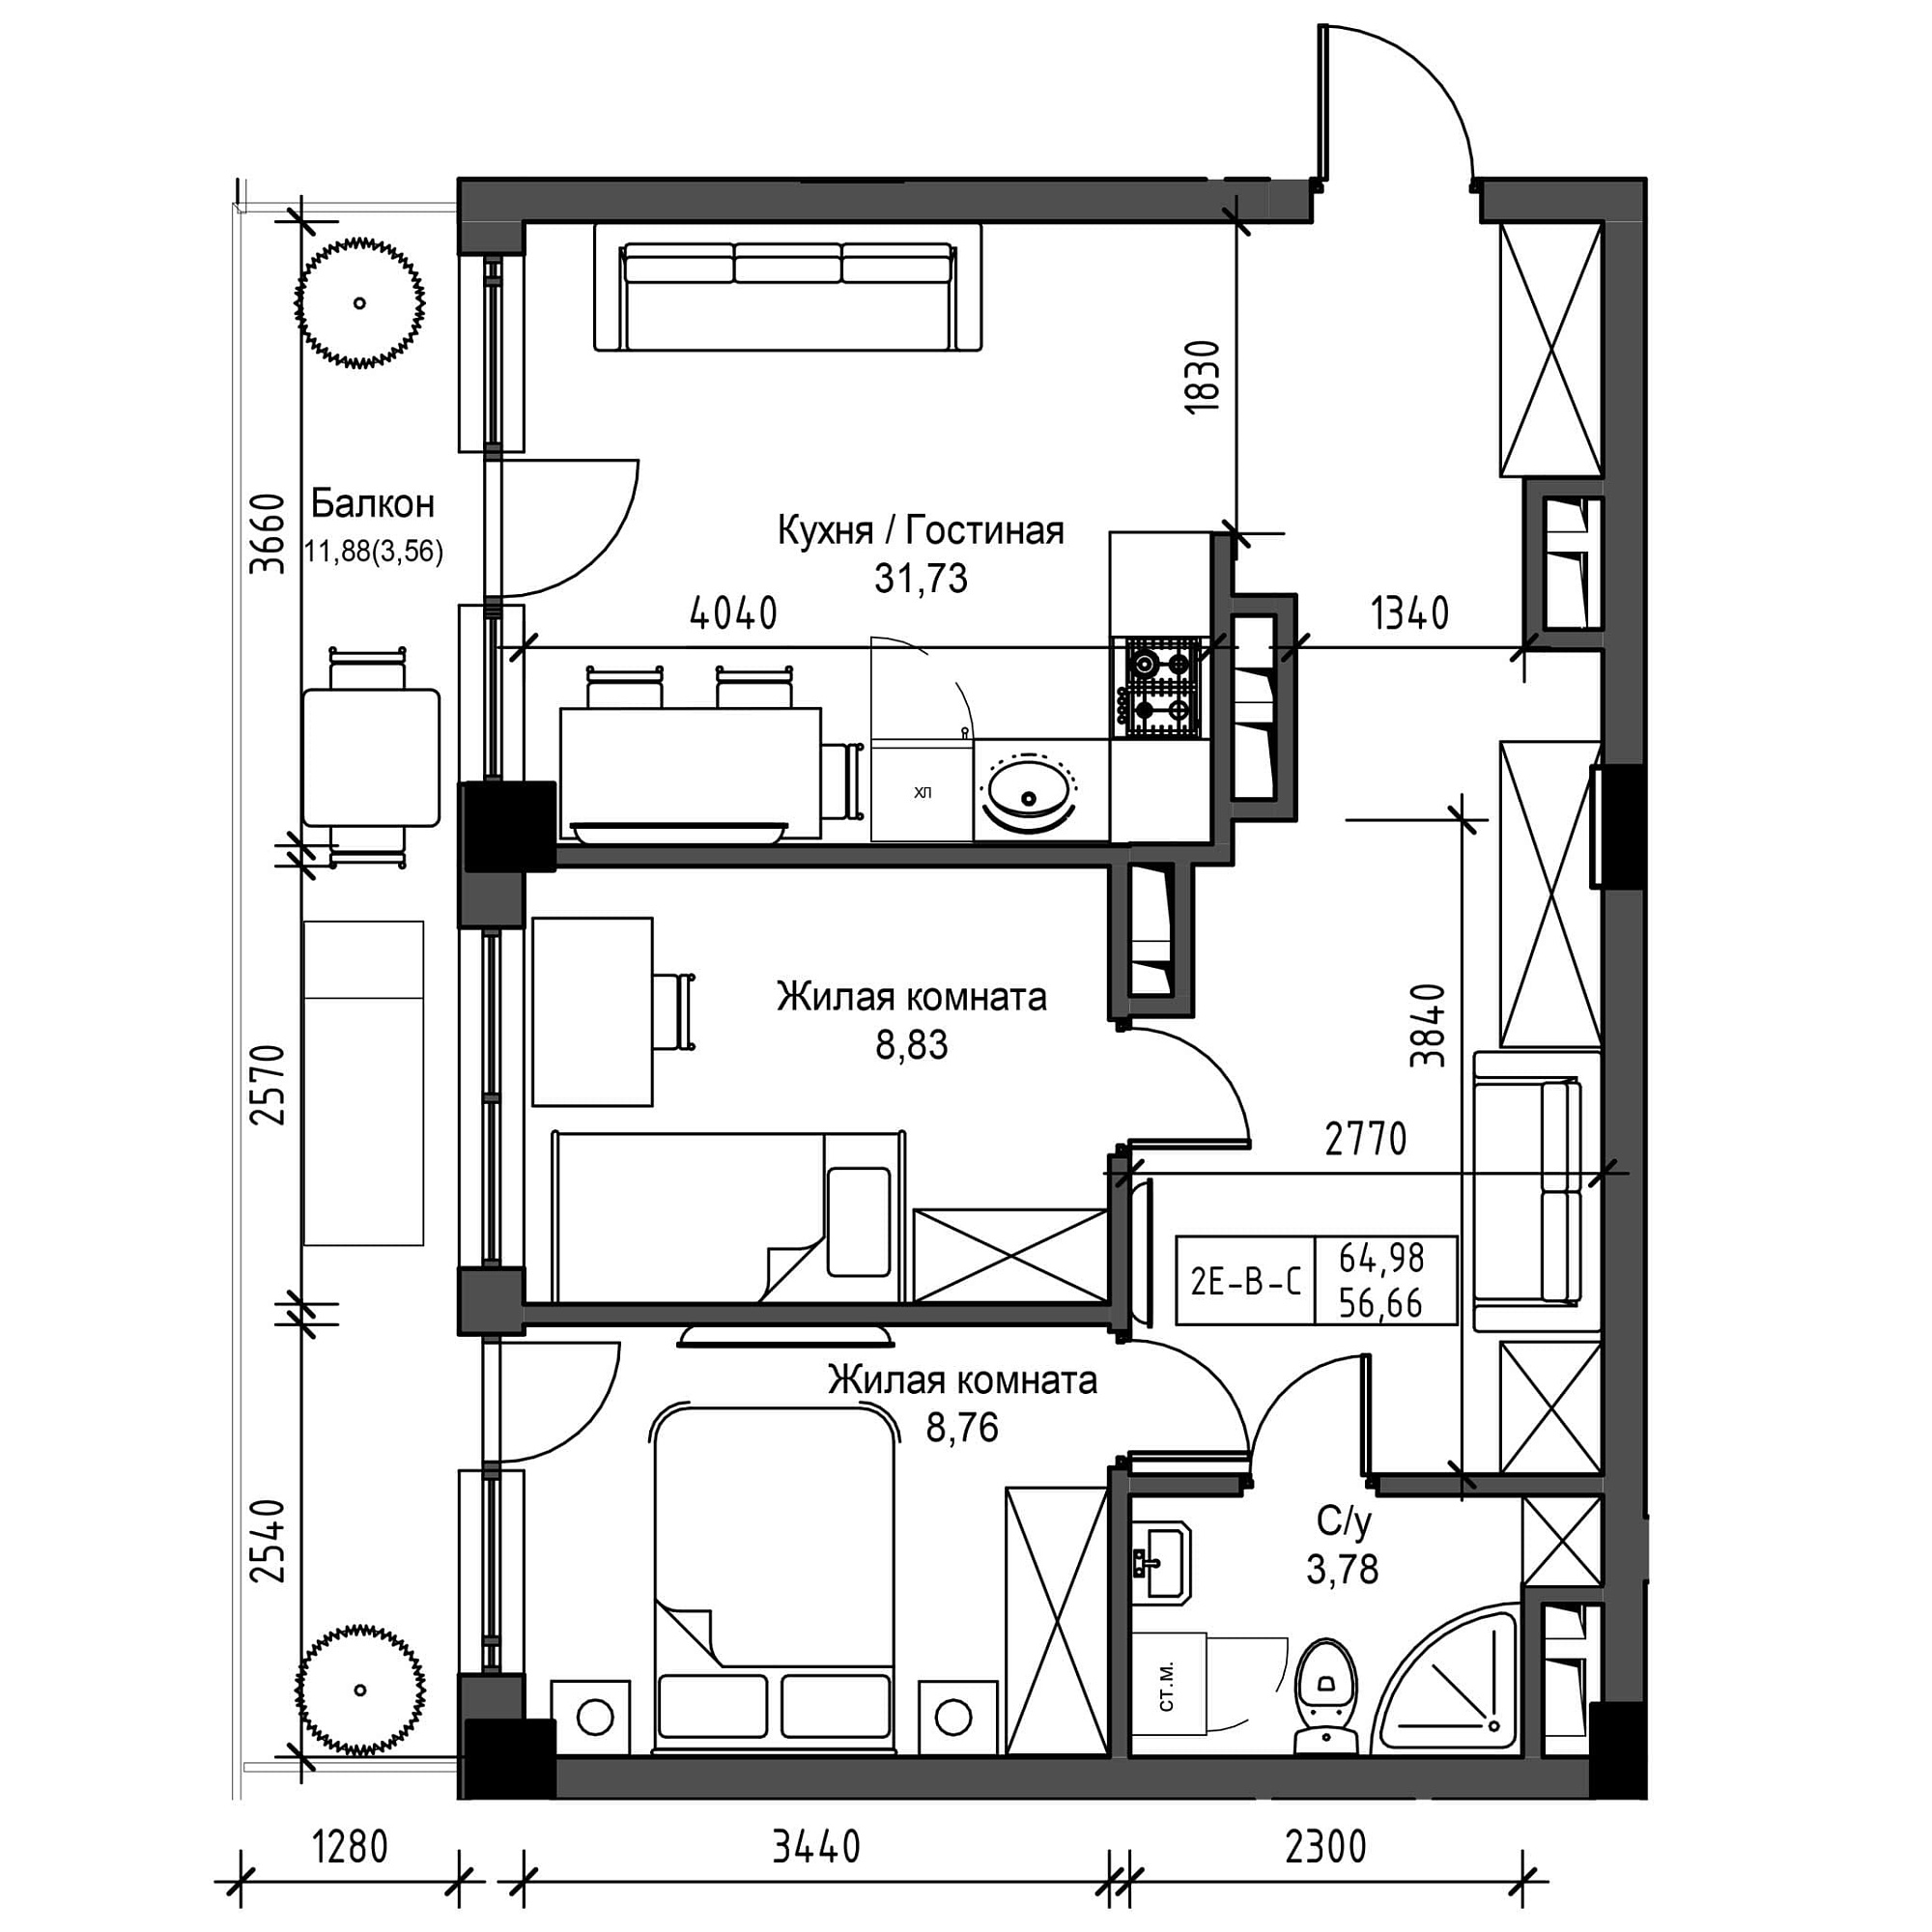 Планування 2-к квартира площею 56.66м2, UM-001-07/0010.